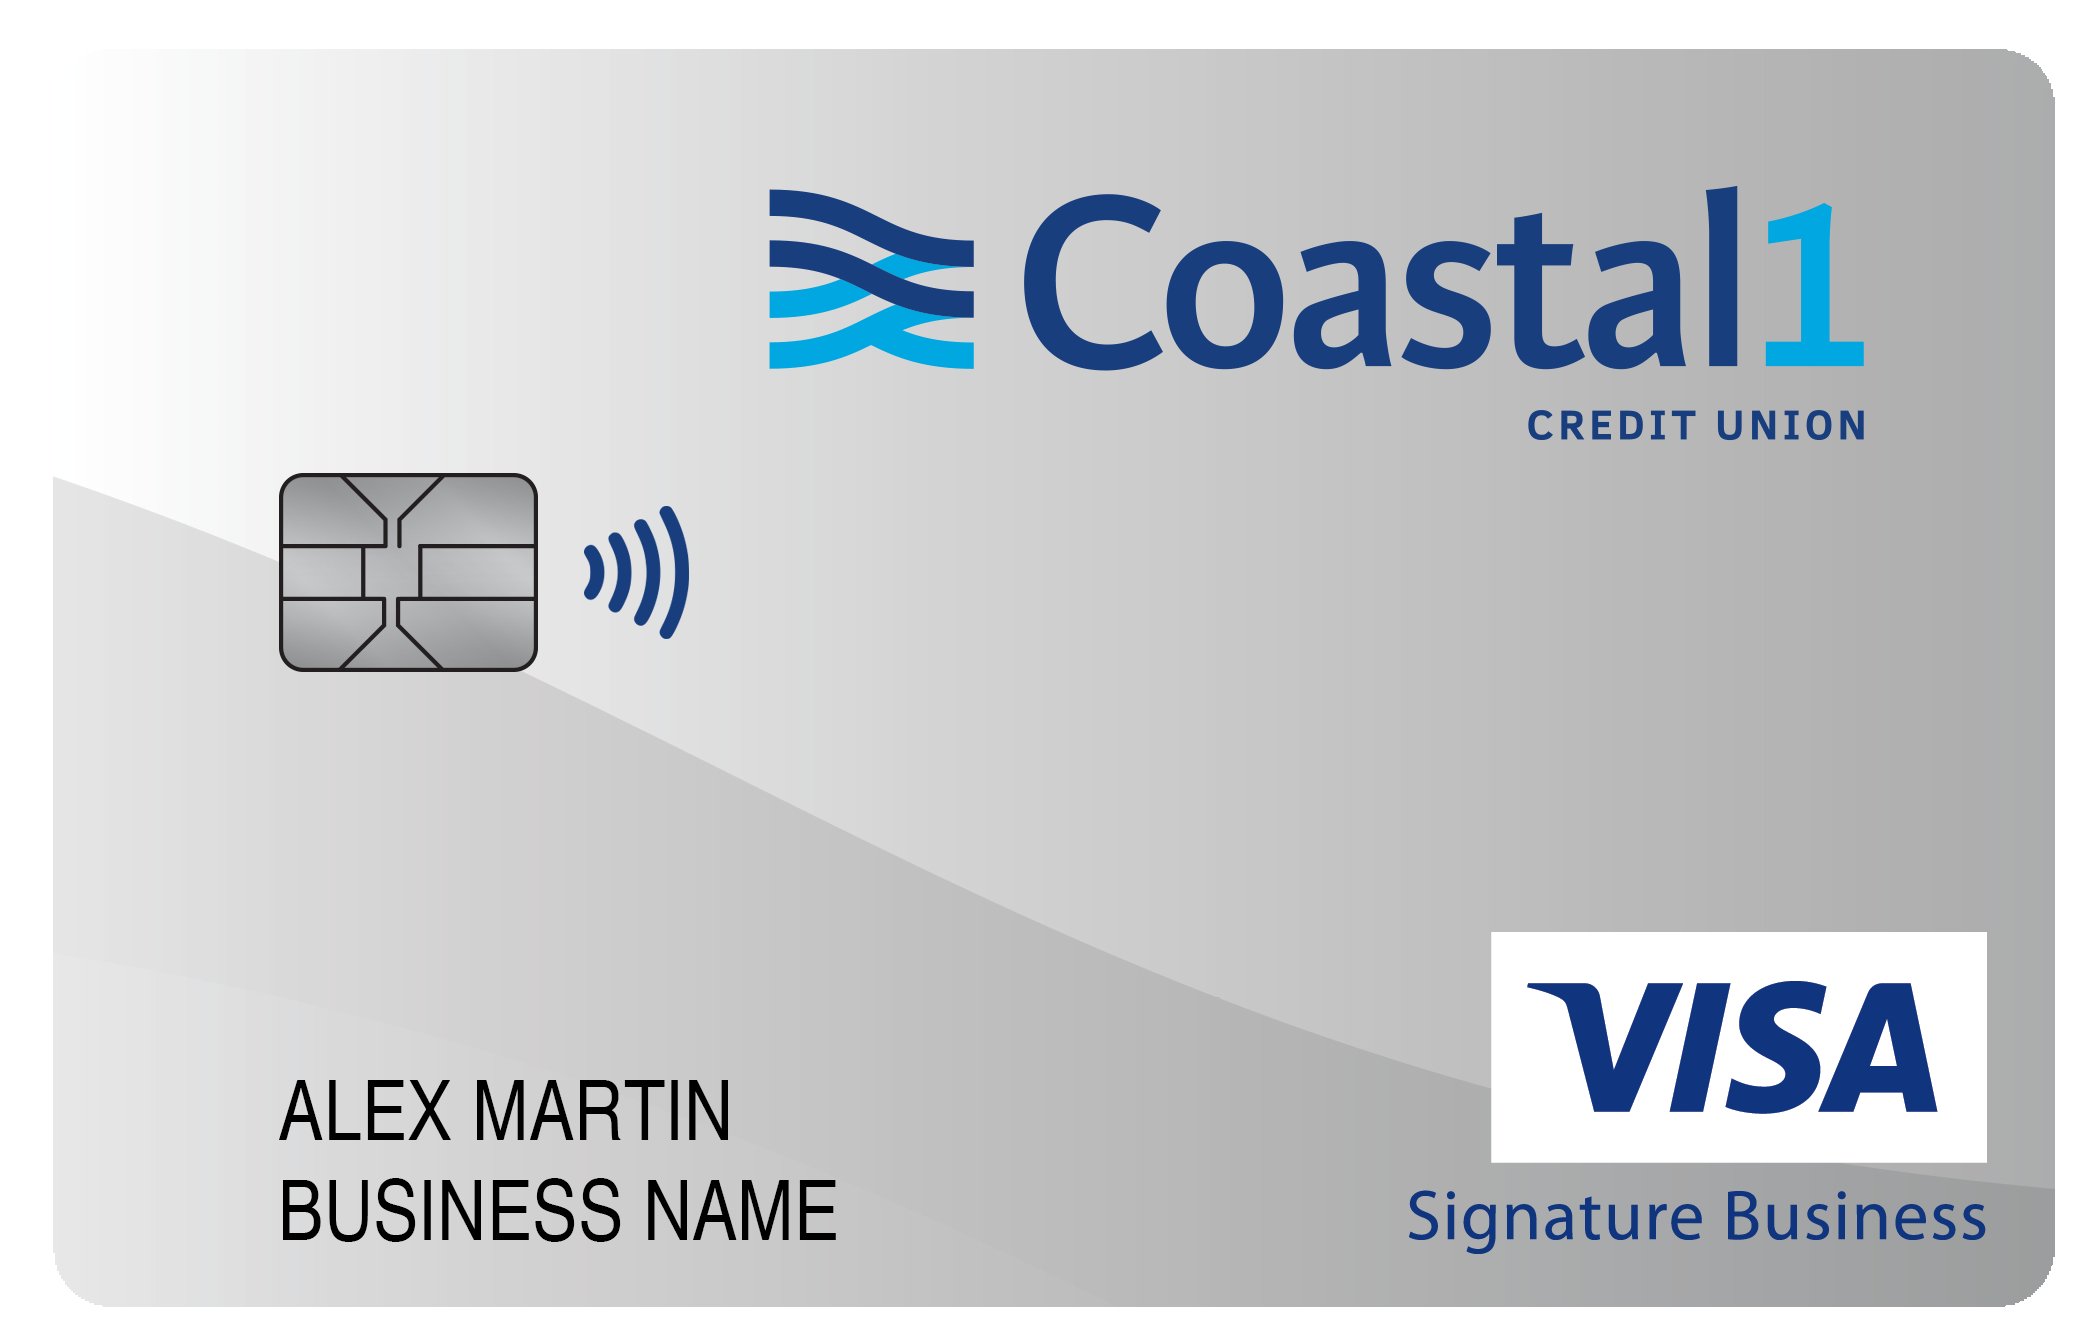 Coastal1 Credit Union Smart Business Rewards Card